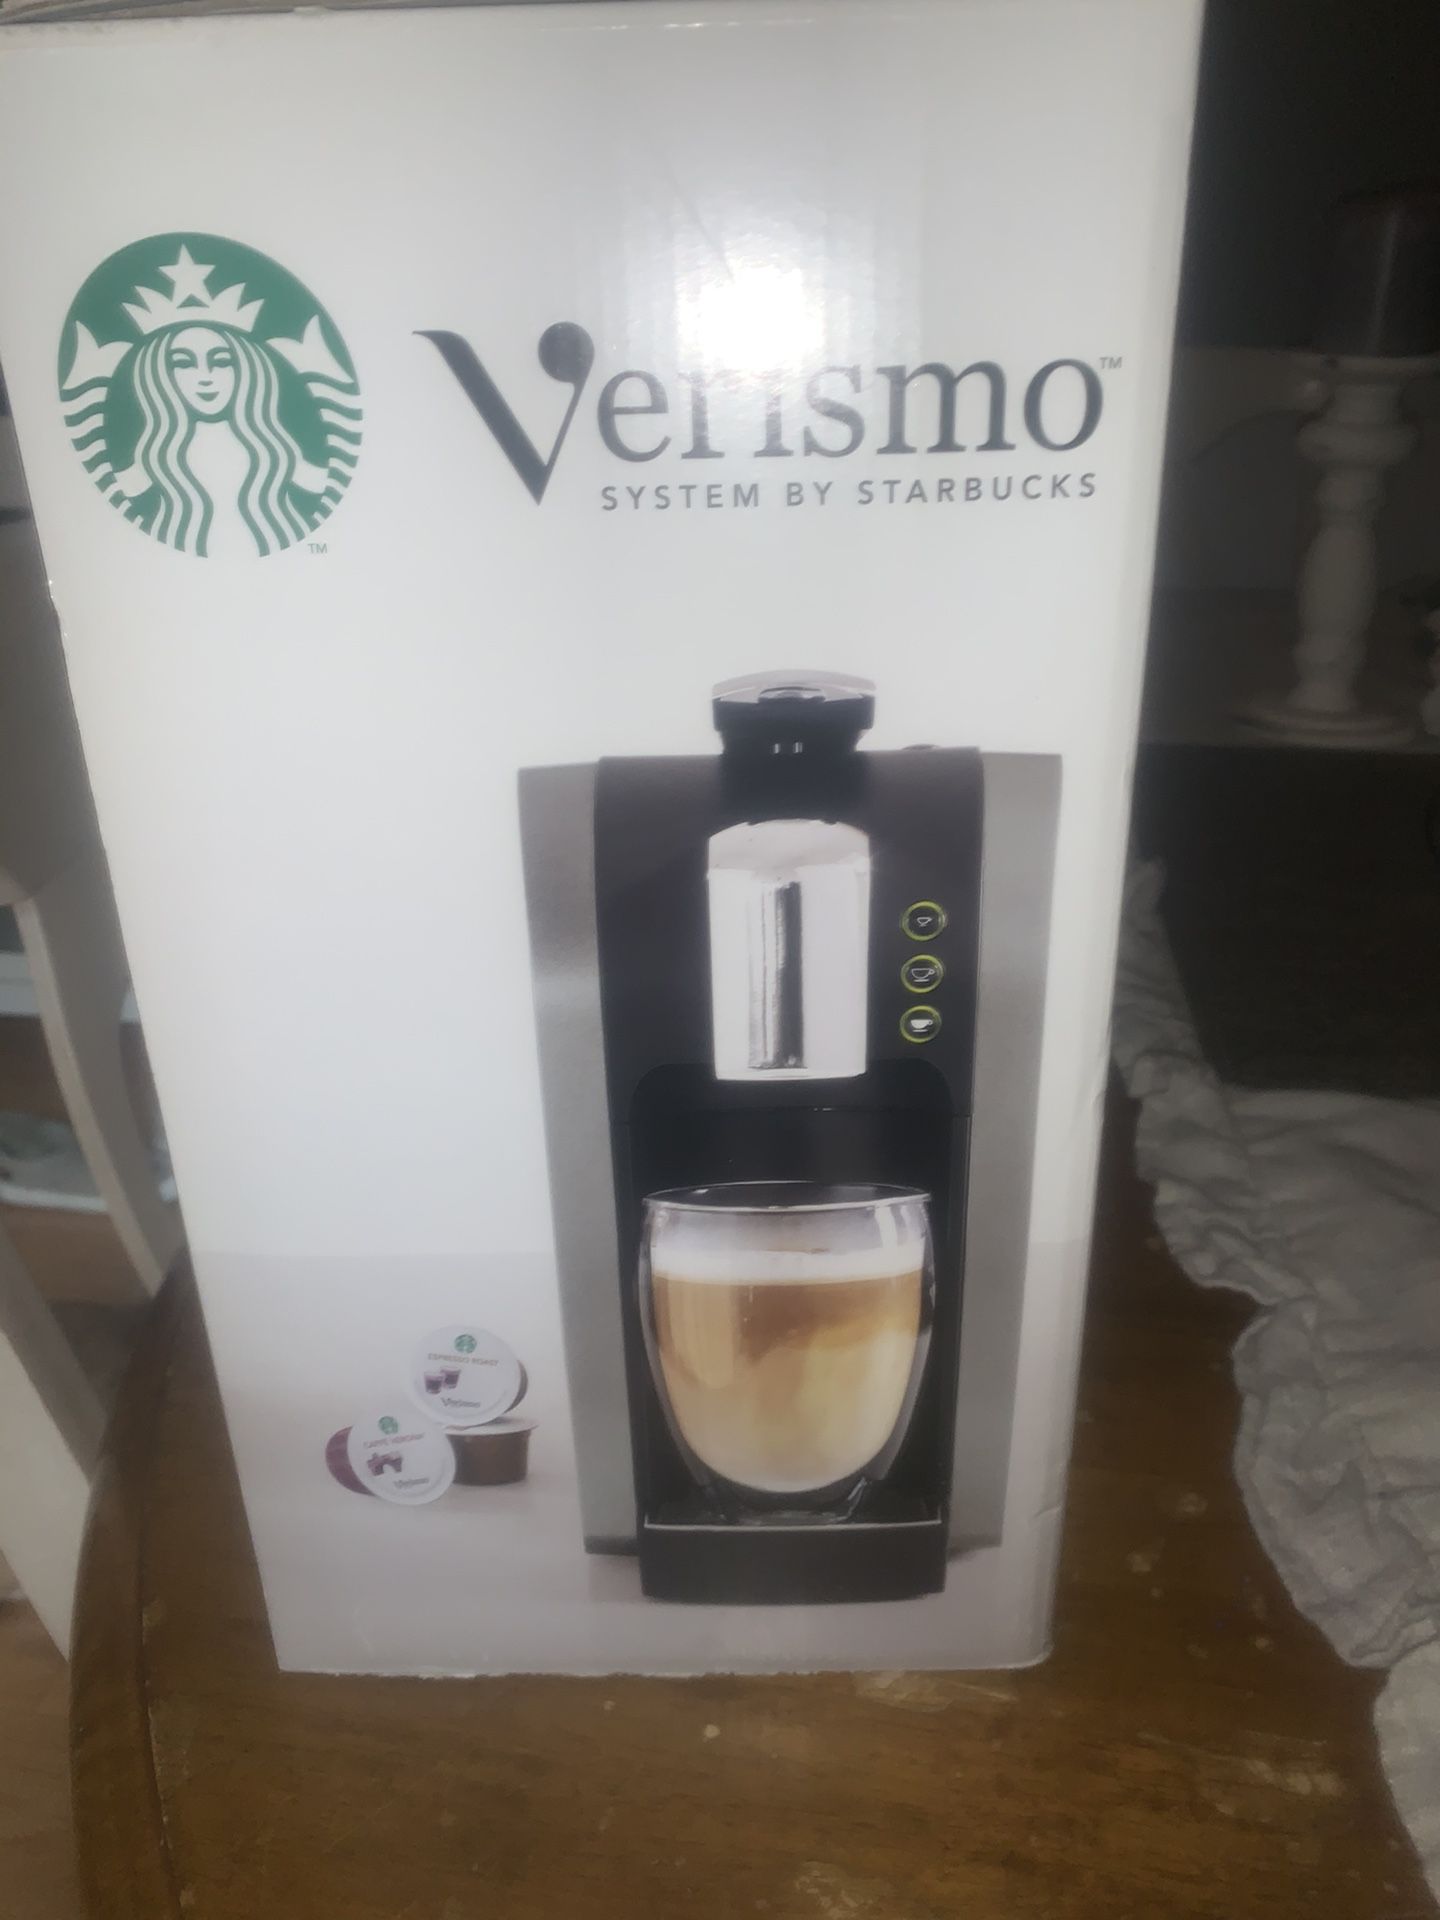 Verismo Starbucks espresso /coffee maker - BRAND NEW